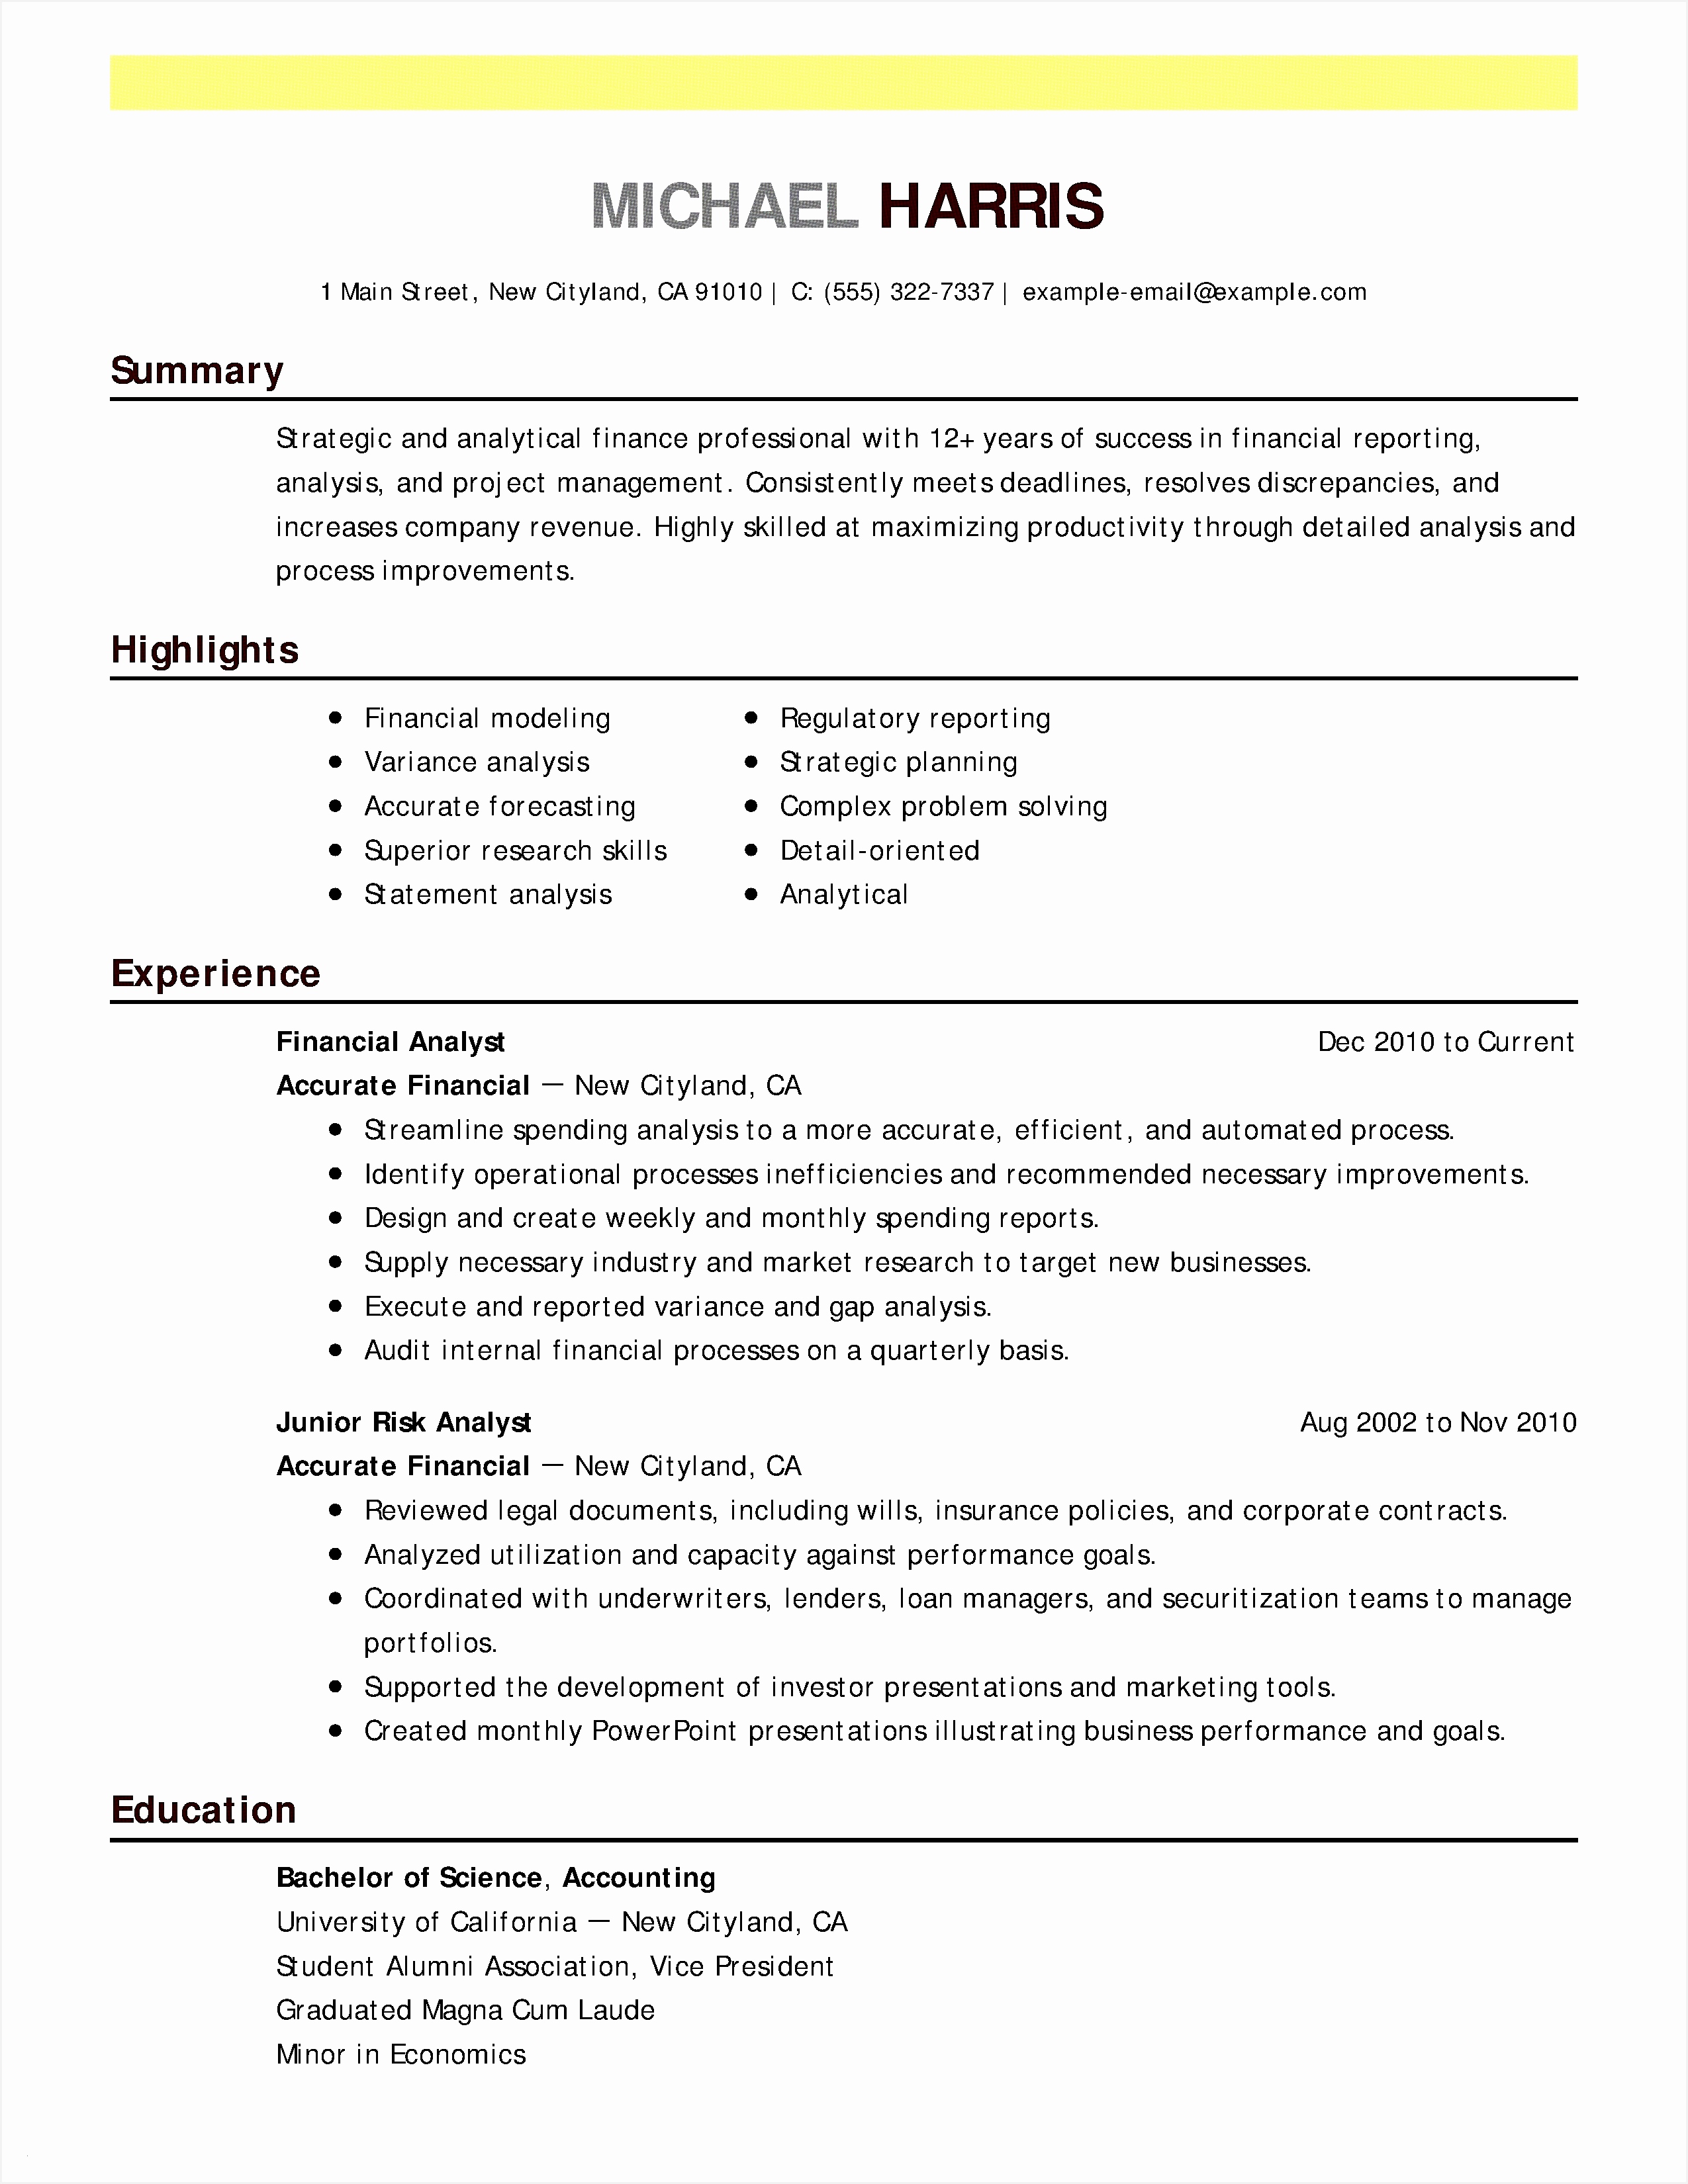 Resume Template Basic New Basic Resume Objective Fresh Resume Sample33002550